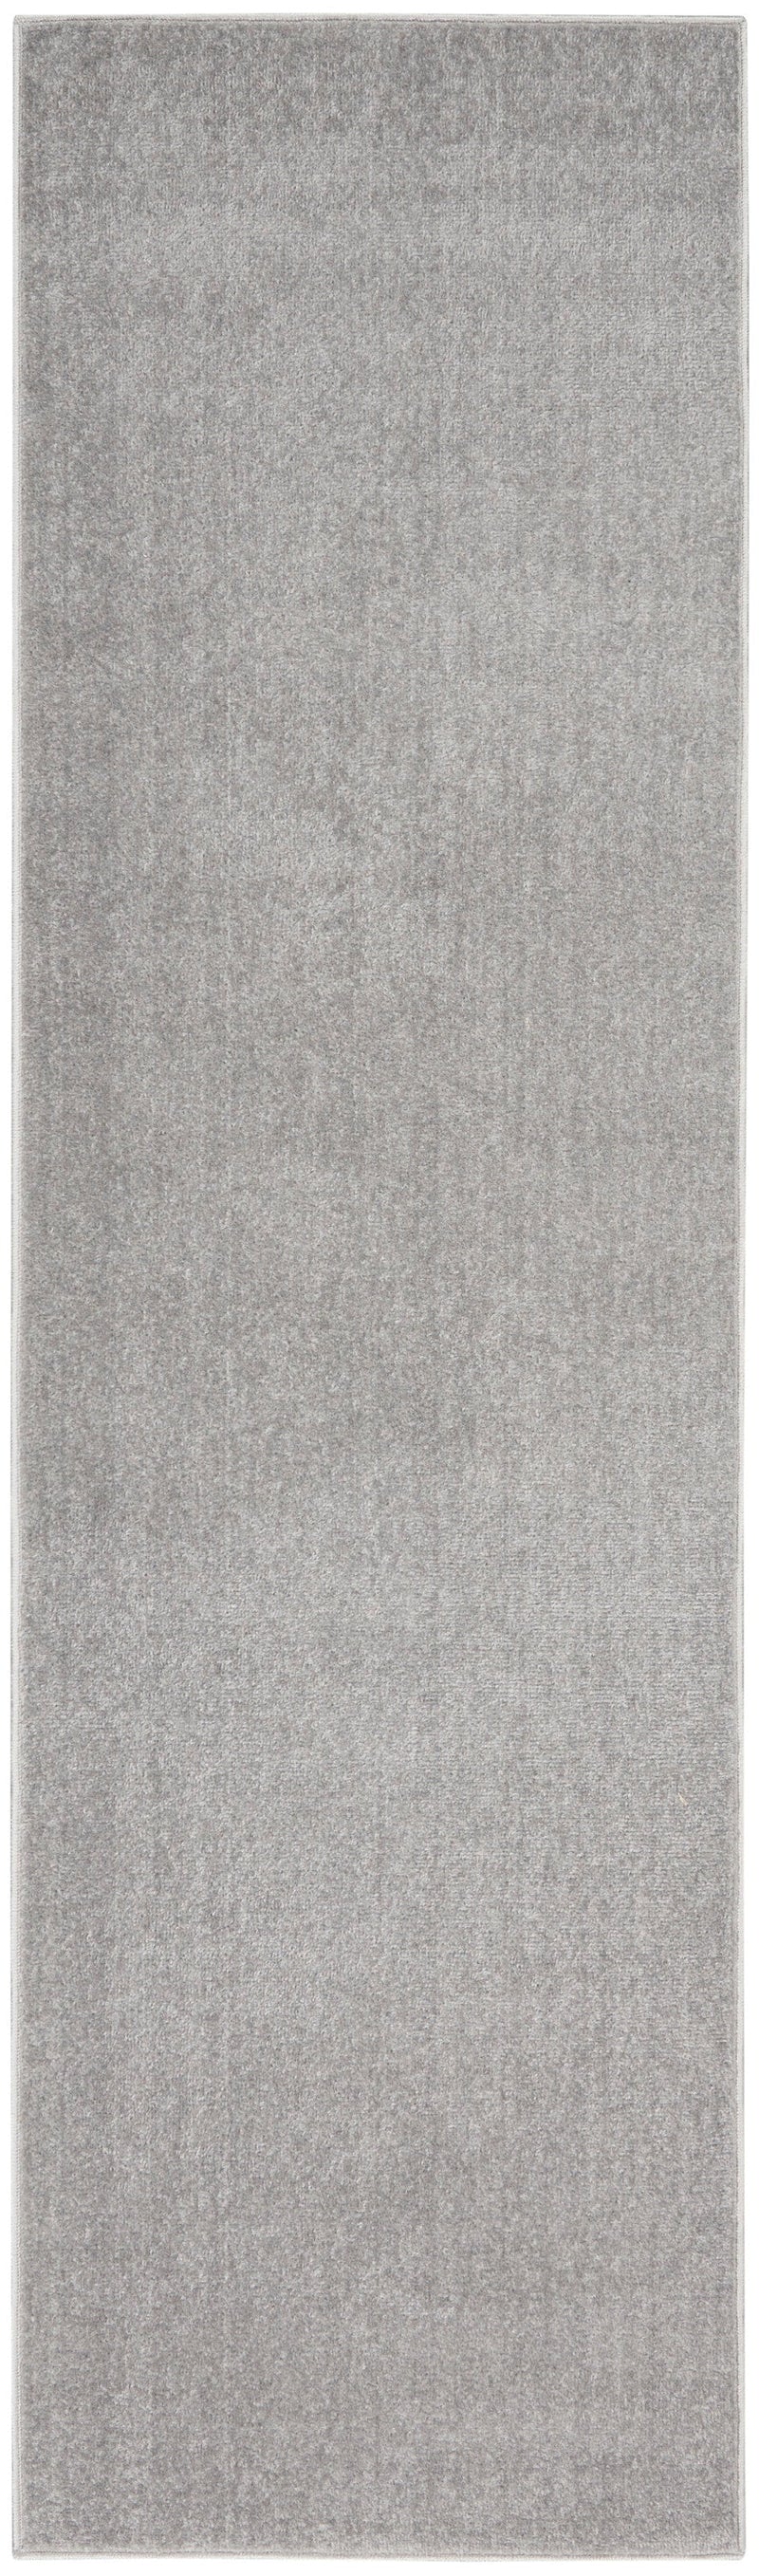 media image for nourison essentials silver grey rug by nourison 99446062369 redo 4 289